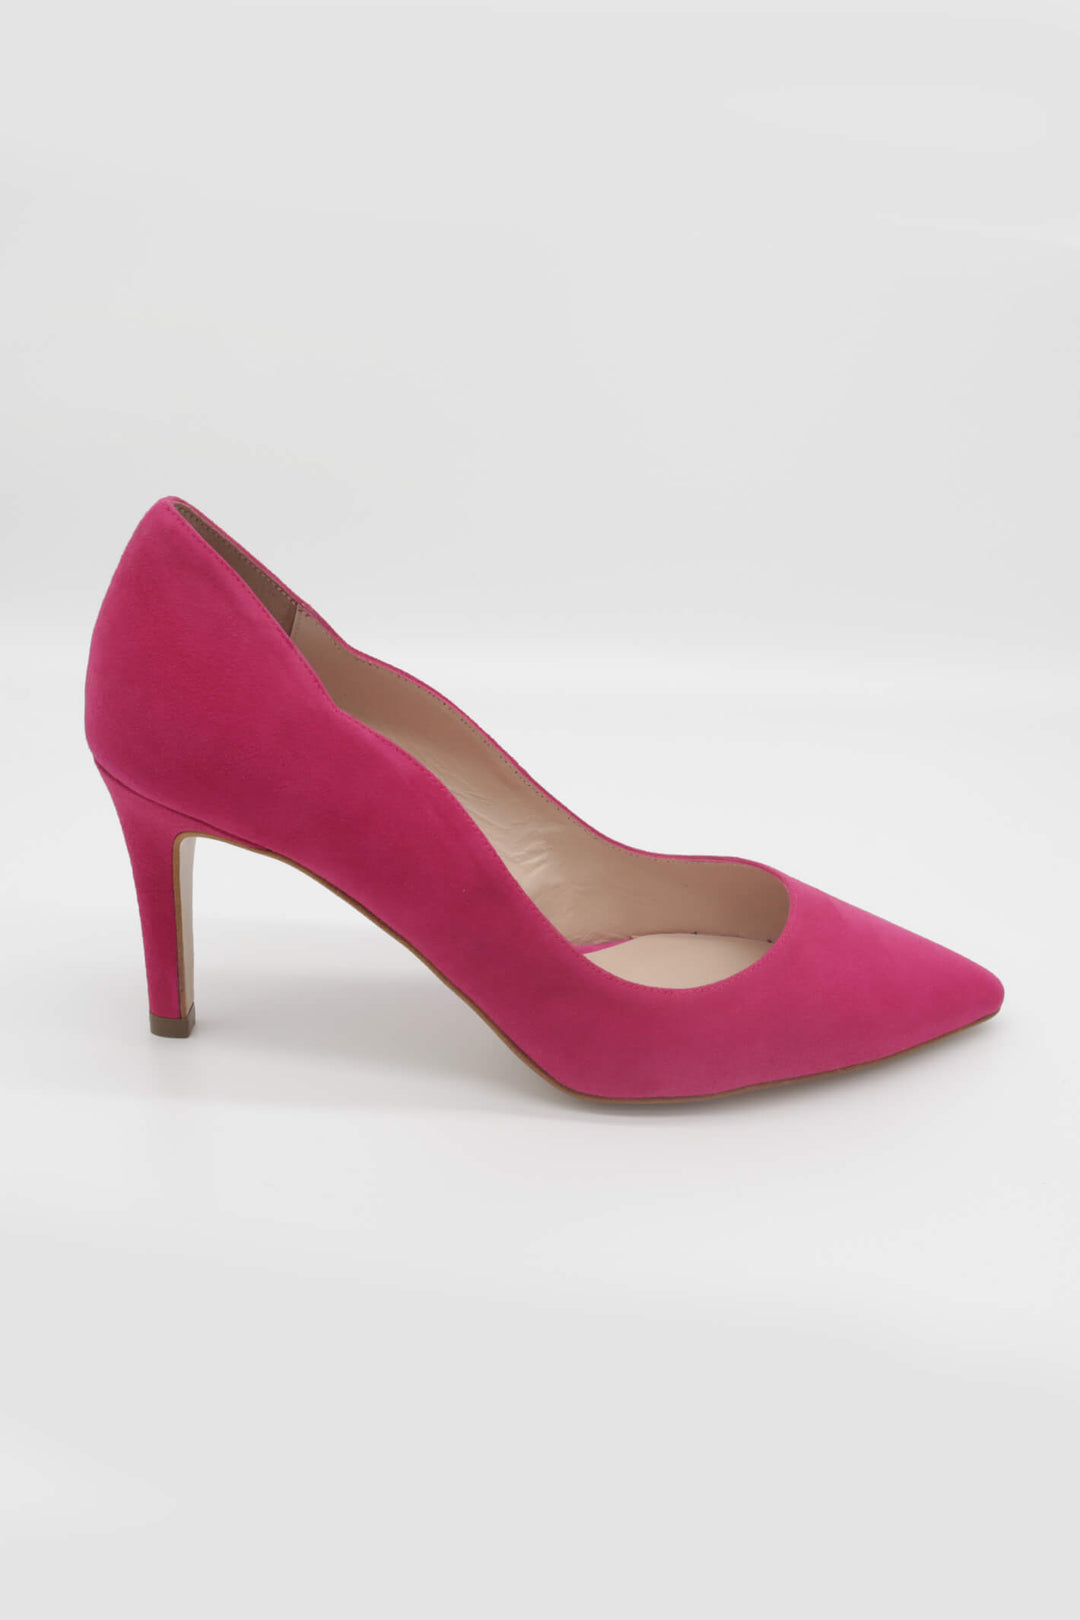 Lisa Kay Carlton Fuschia Pink Suede Shoe - Experience Boutique